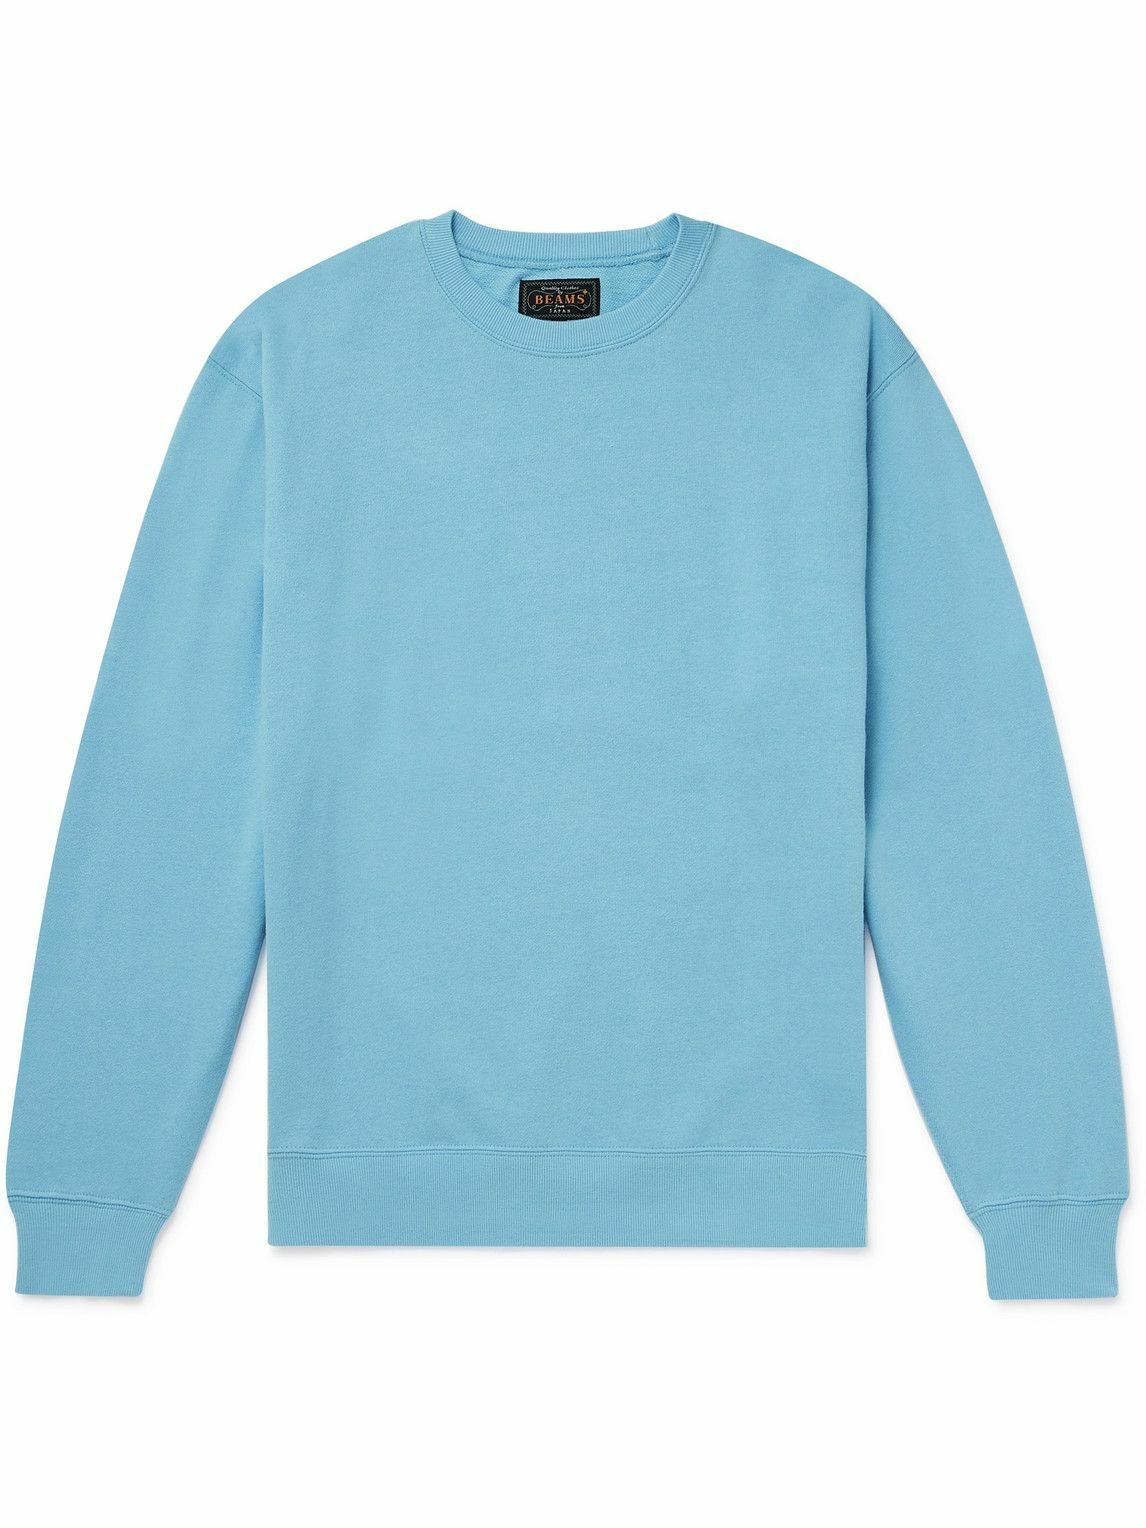 Beams Plus - Cotton-Jersey Sweatshirt - Blue Beams Plus